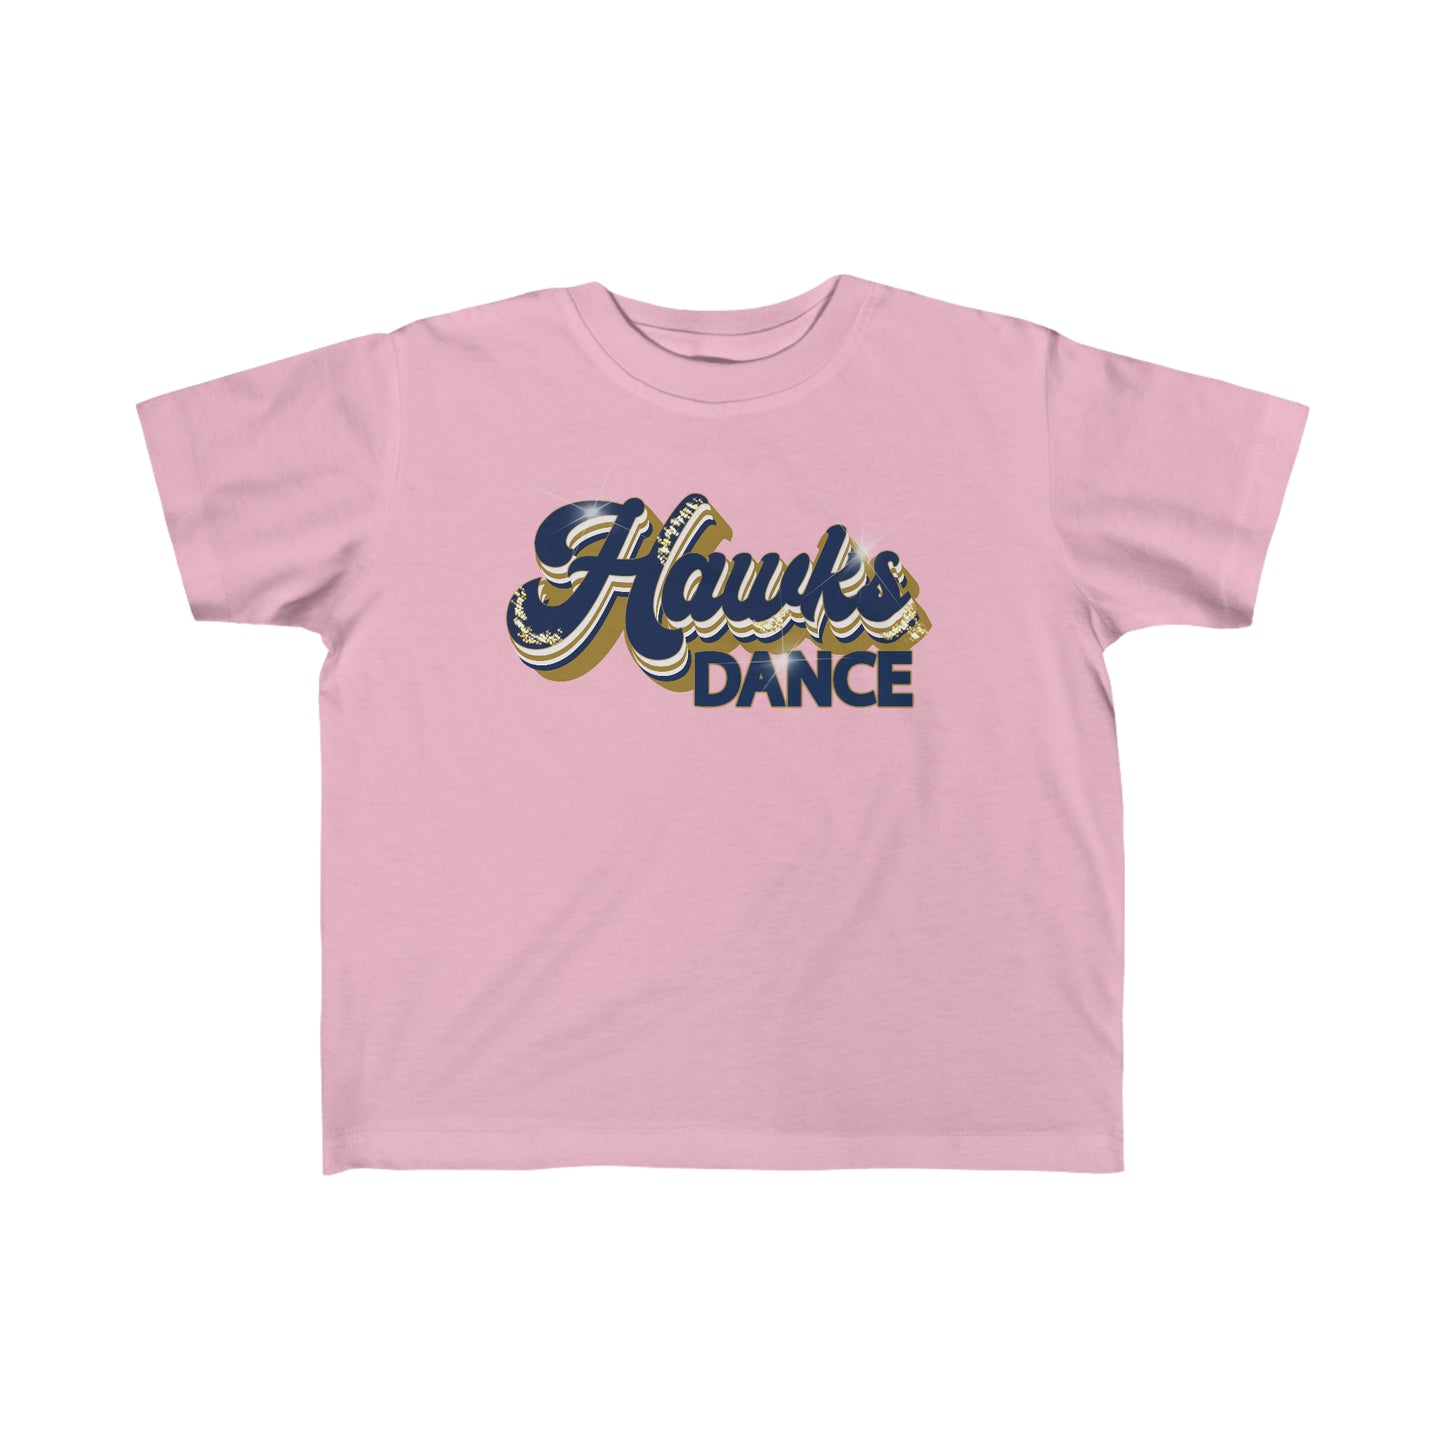 Hawks Dance Toddler Shirt